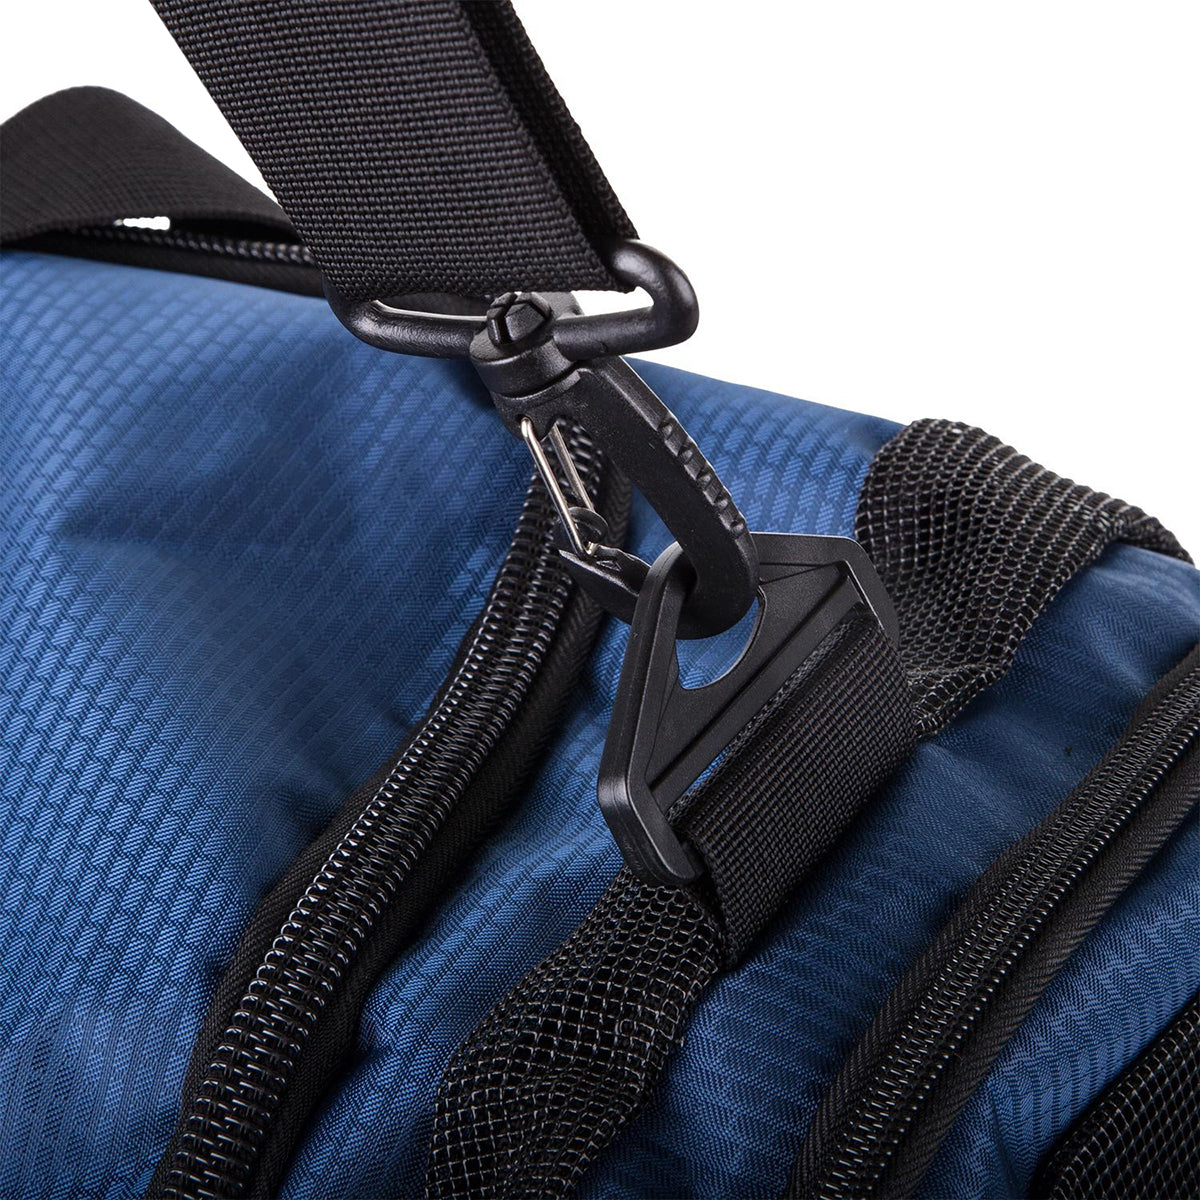 Venum Trainer Lite Sport Duffel Bag - Navy Blue/White Venum